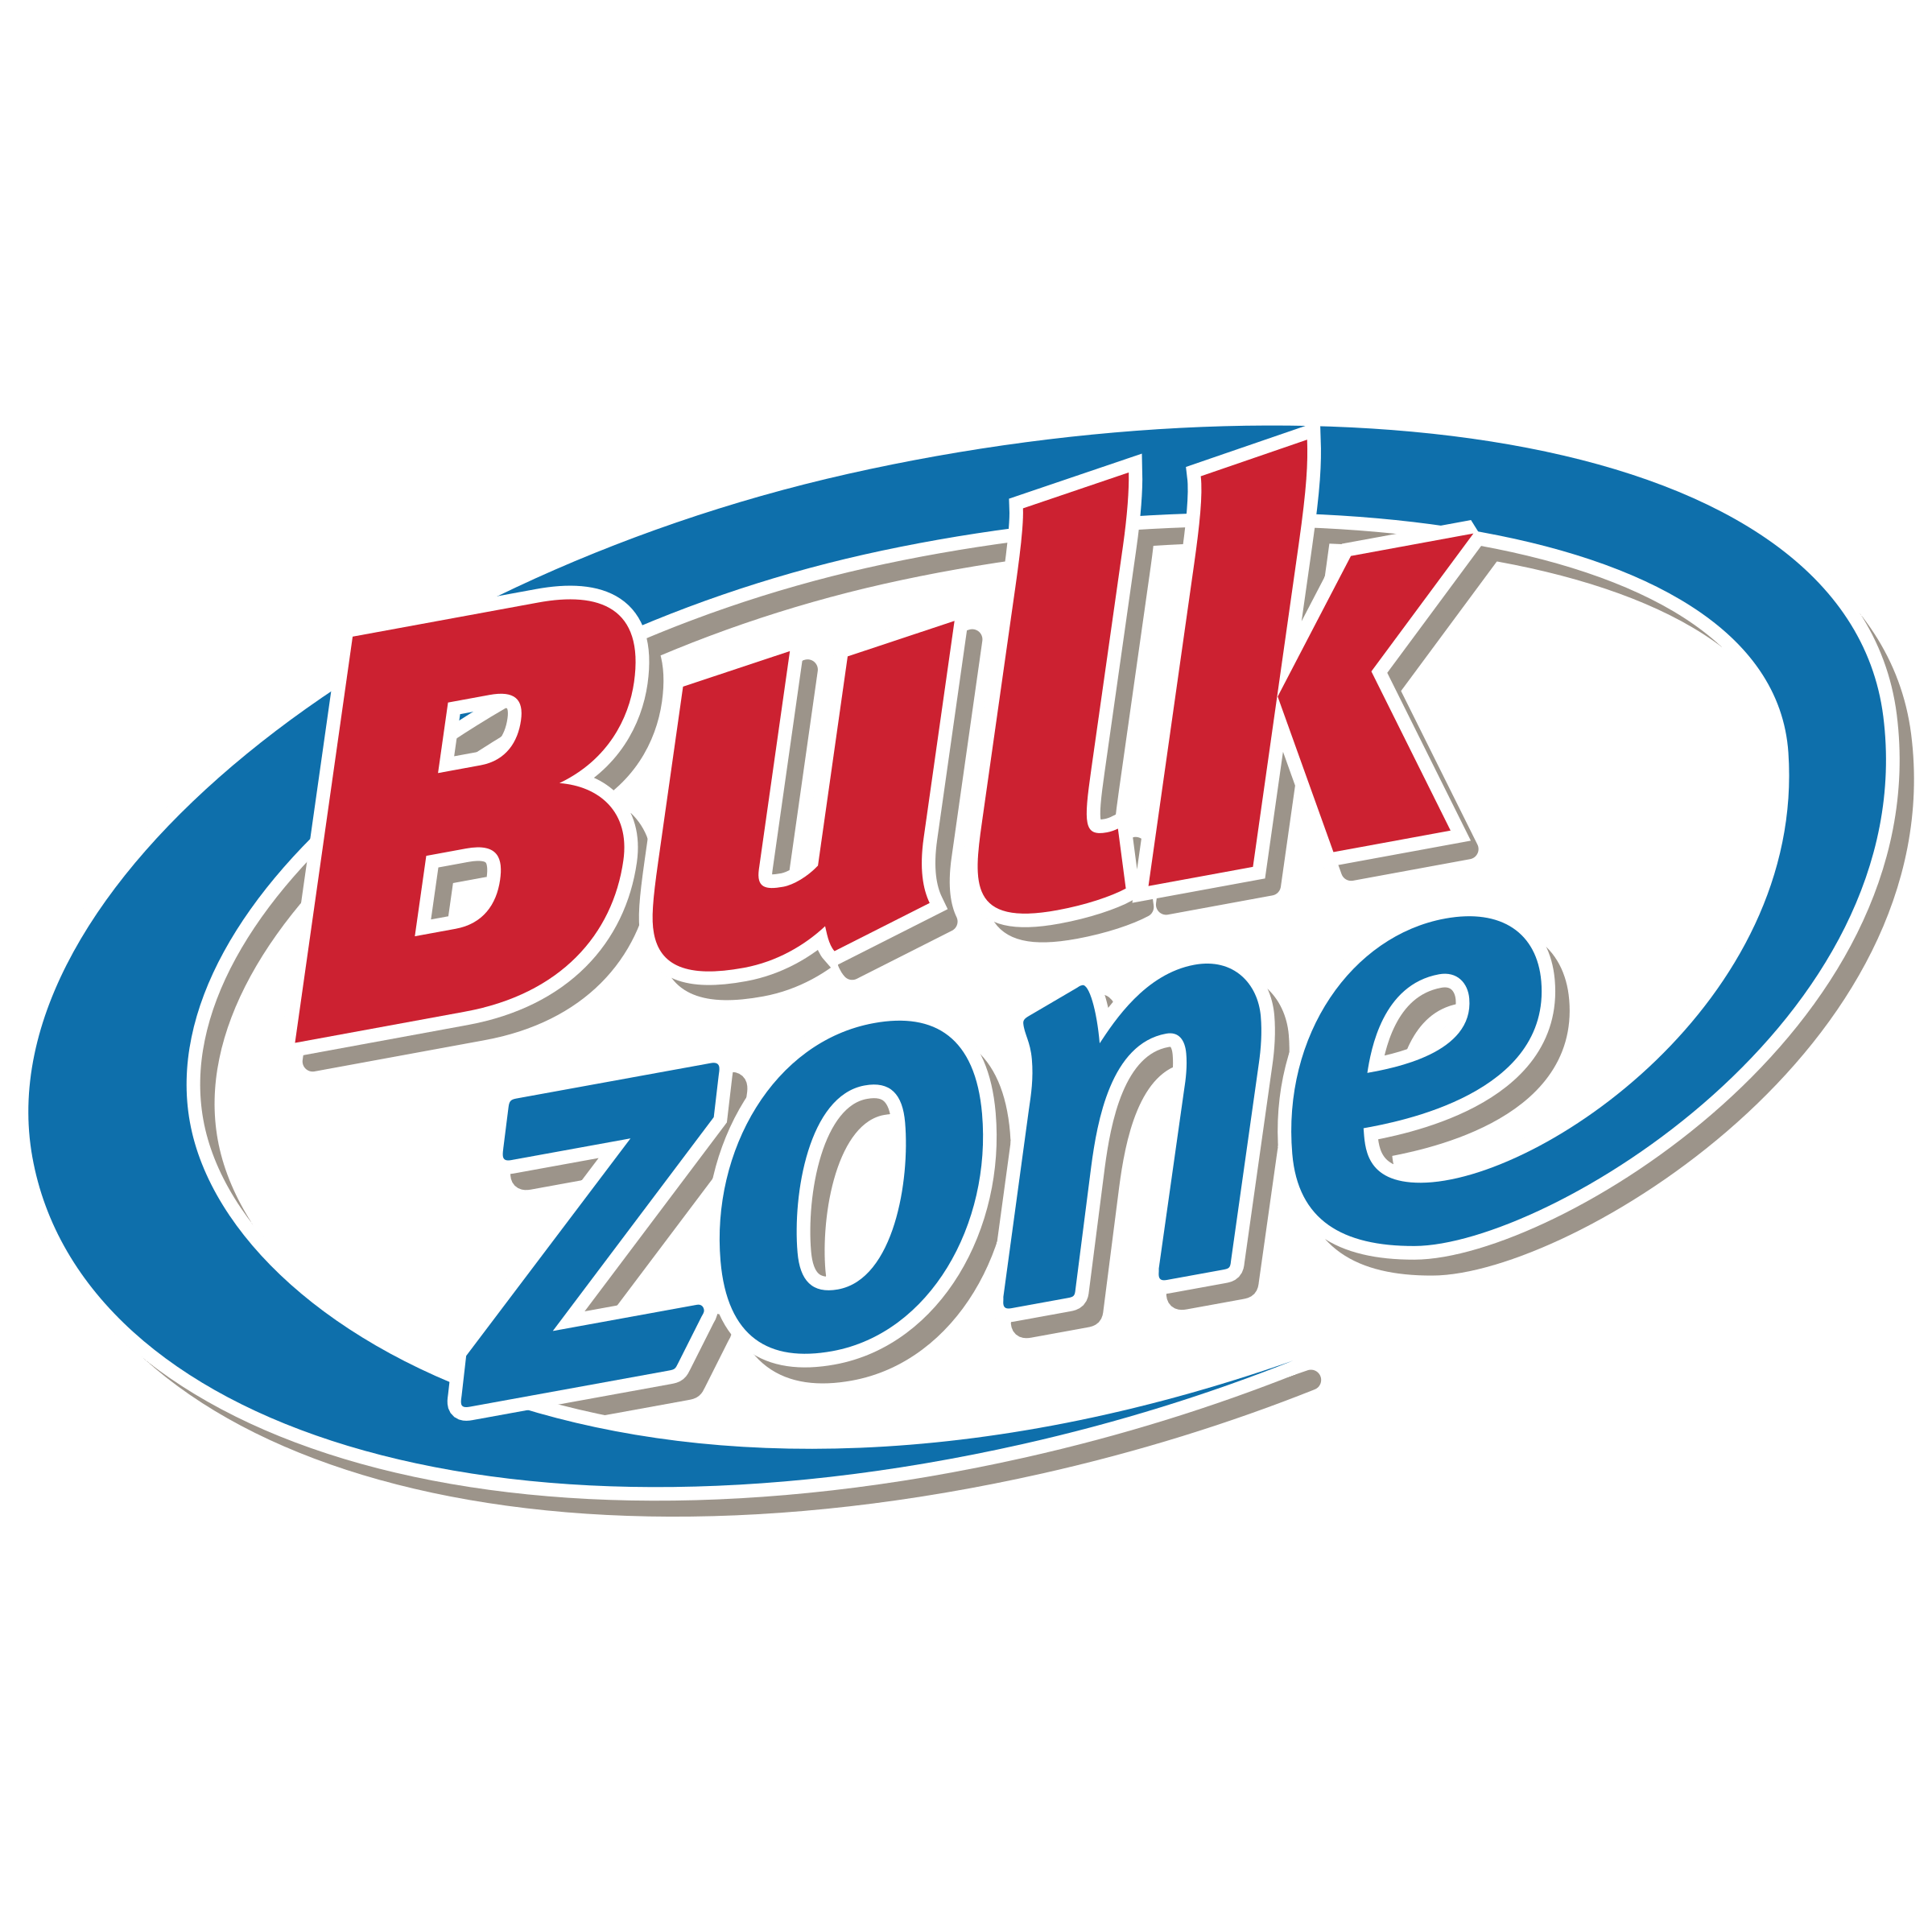 Bulk Logo - Bulk Zone 01 Logo PNG Transparent & SVG Vector - Freebie Supply